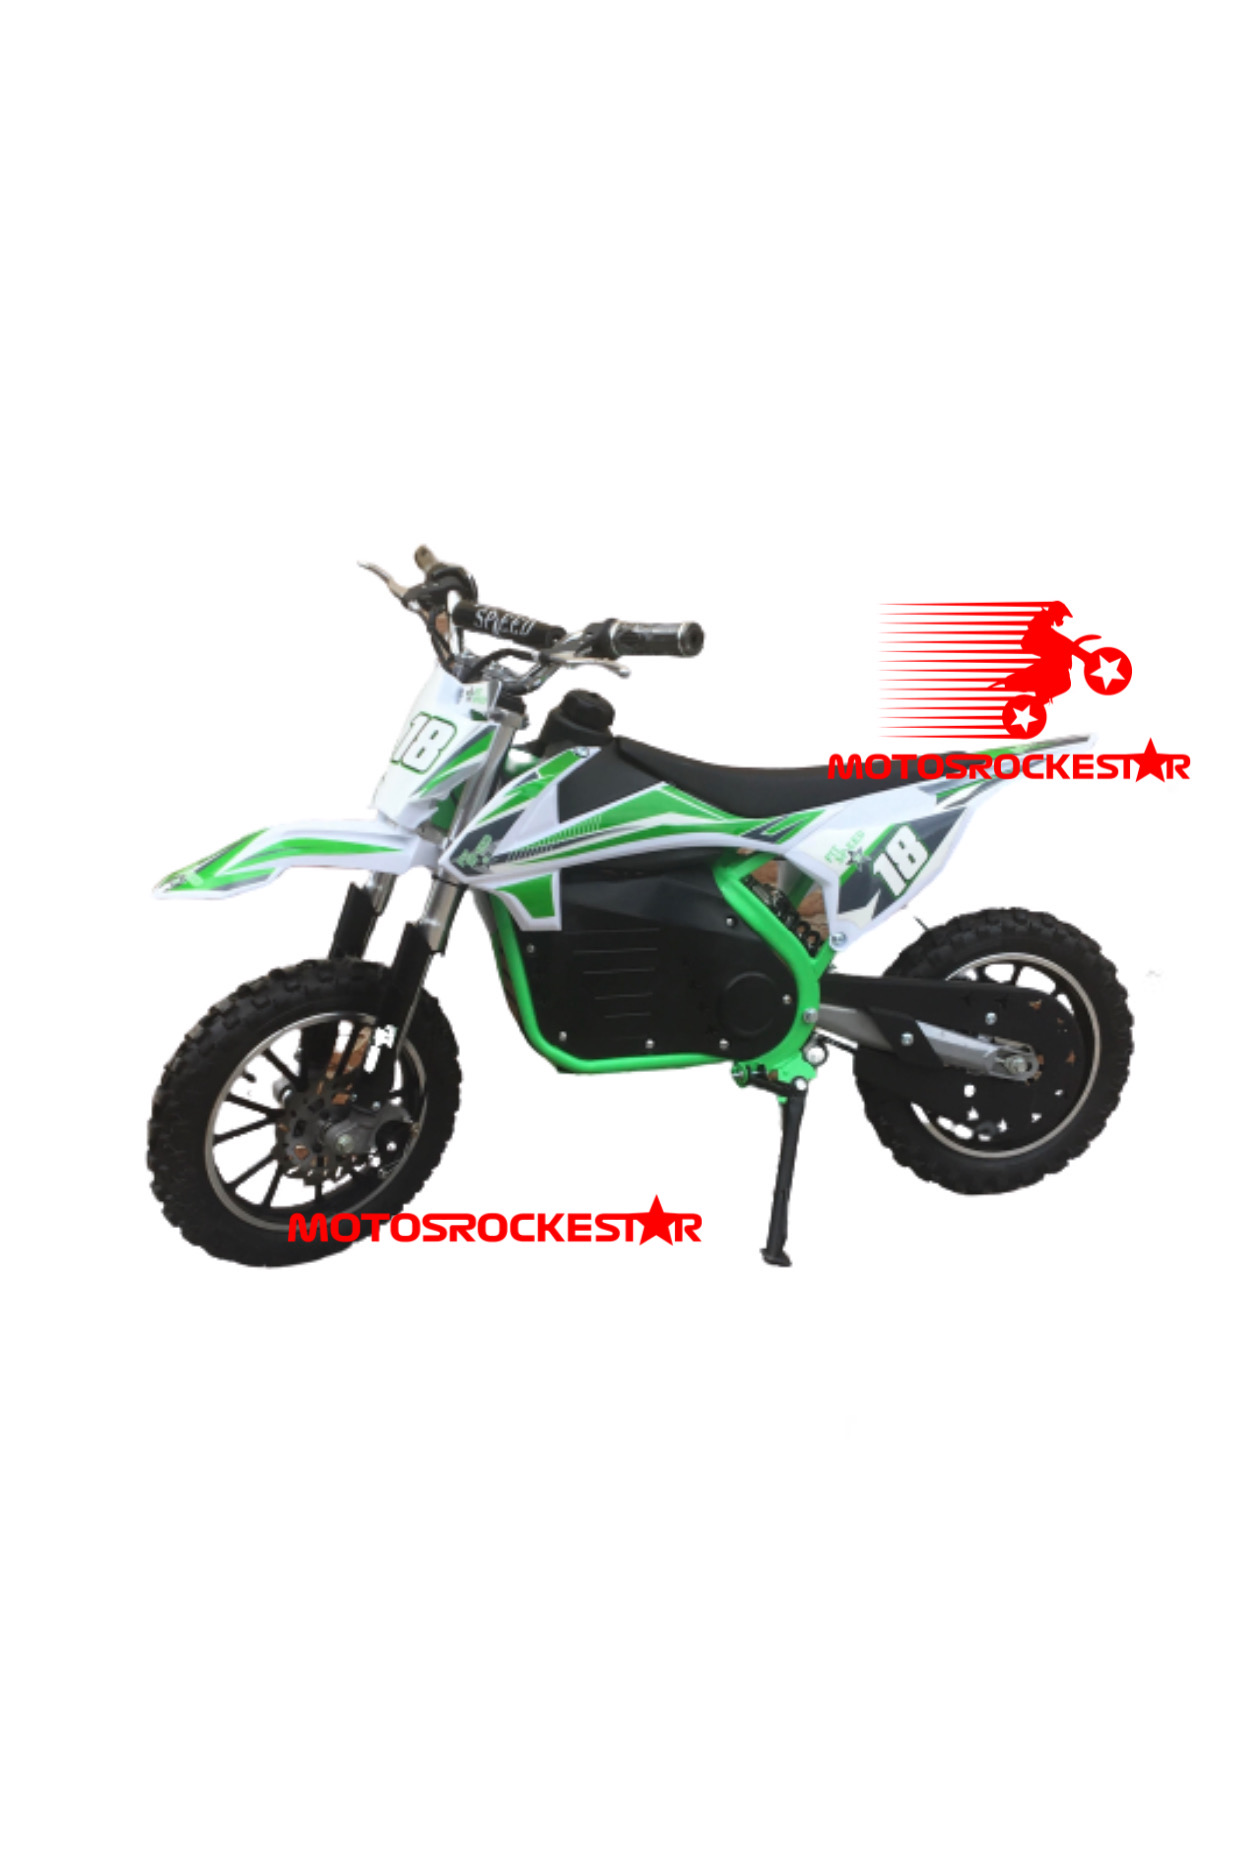 Mini moto eléctrica para niños 36V 300W